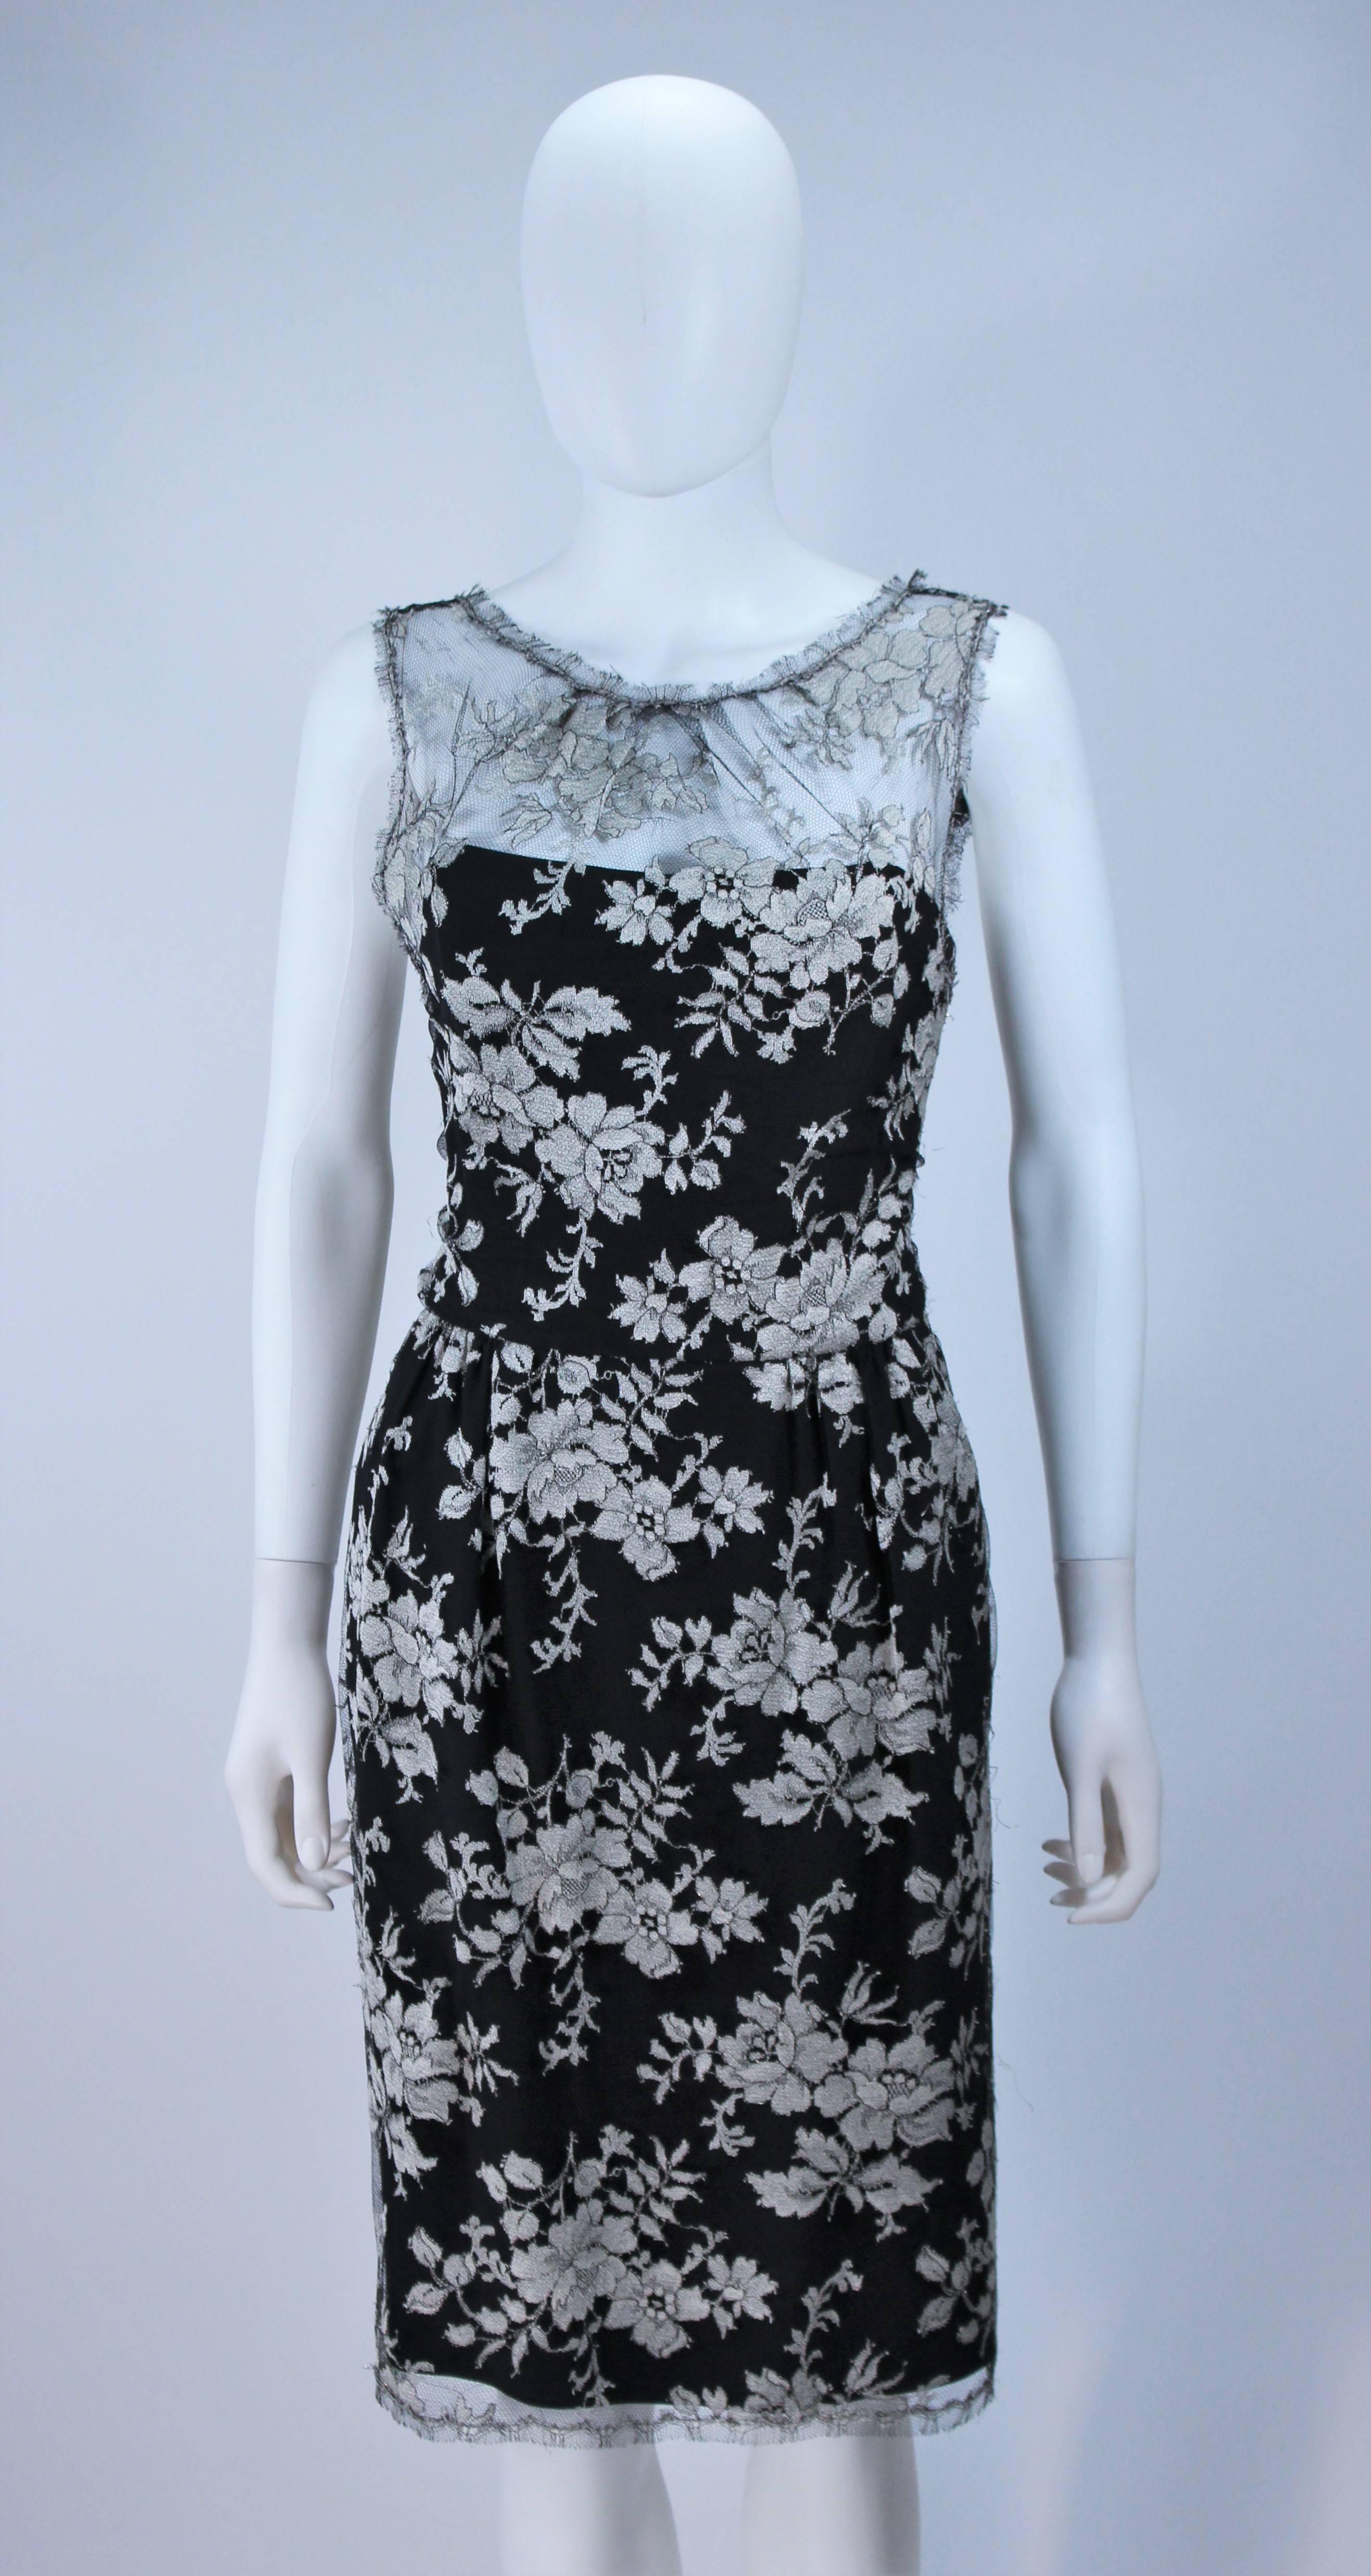 silver lace dress